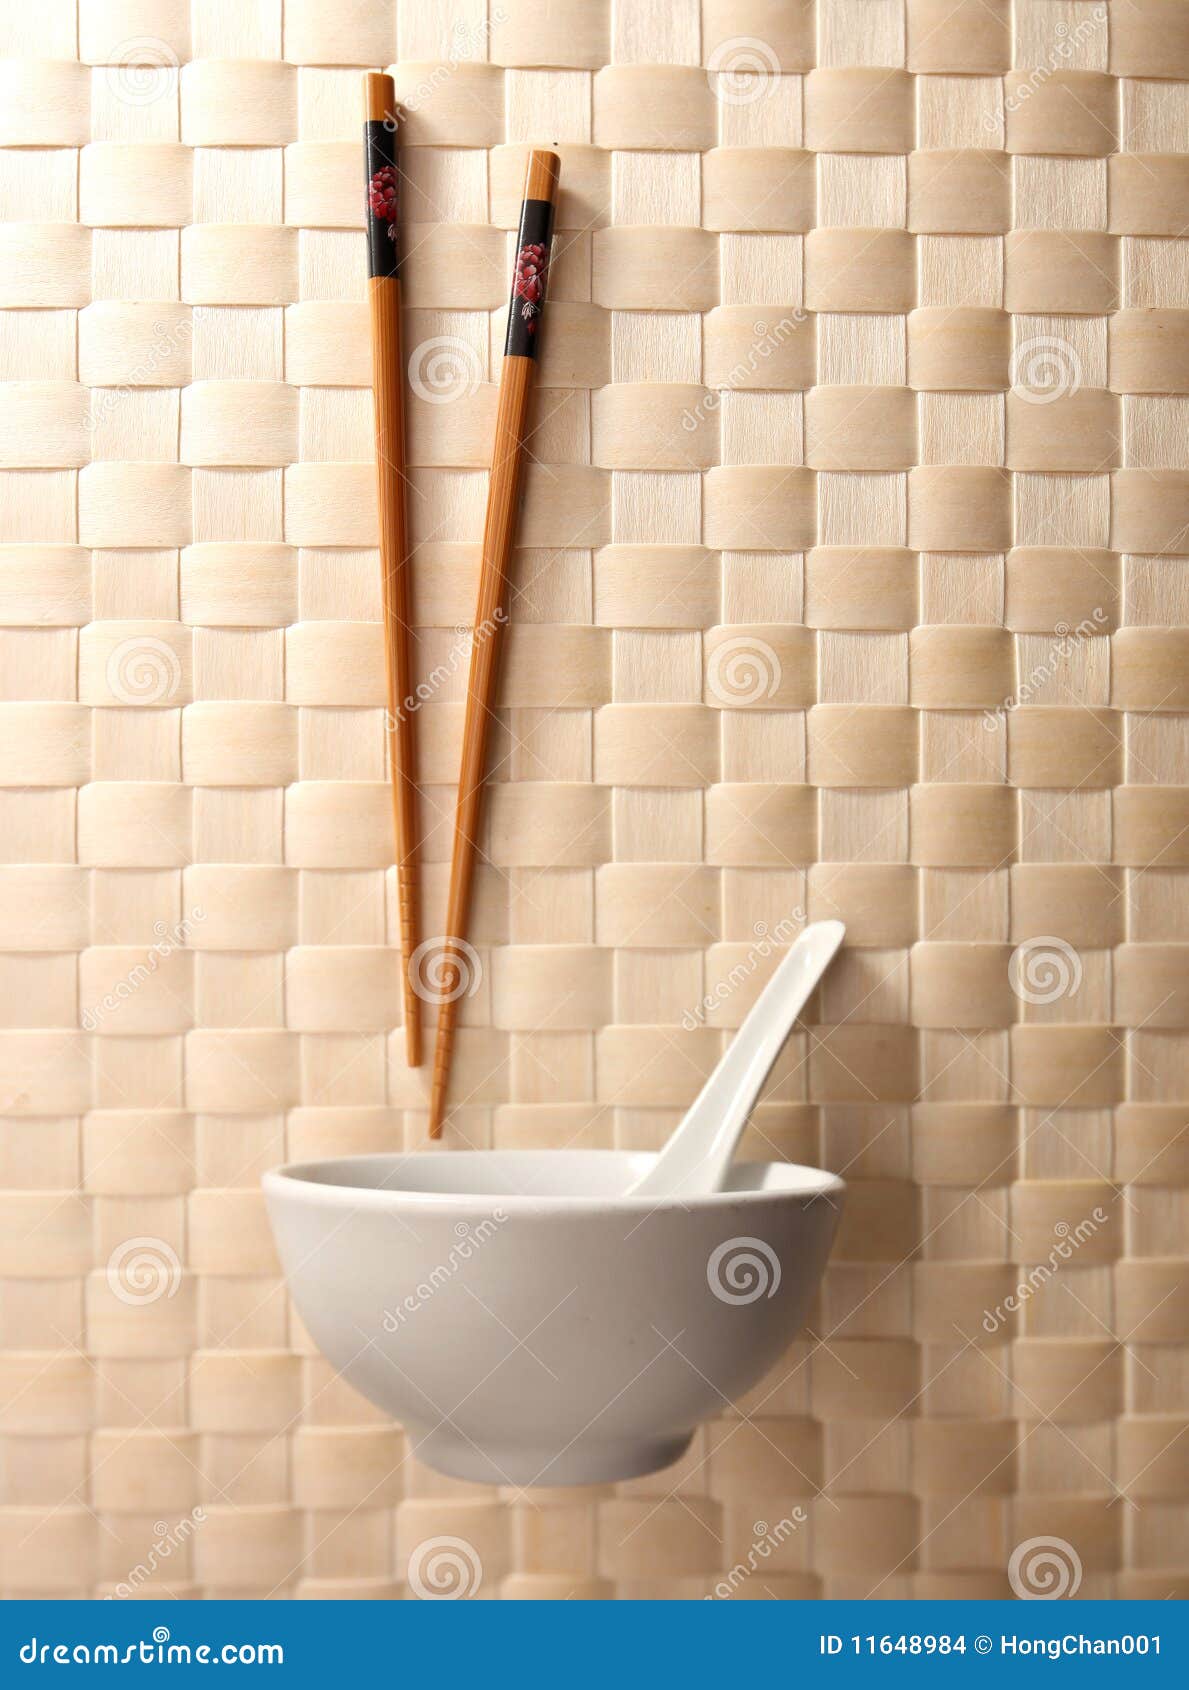 chopstick and bowl